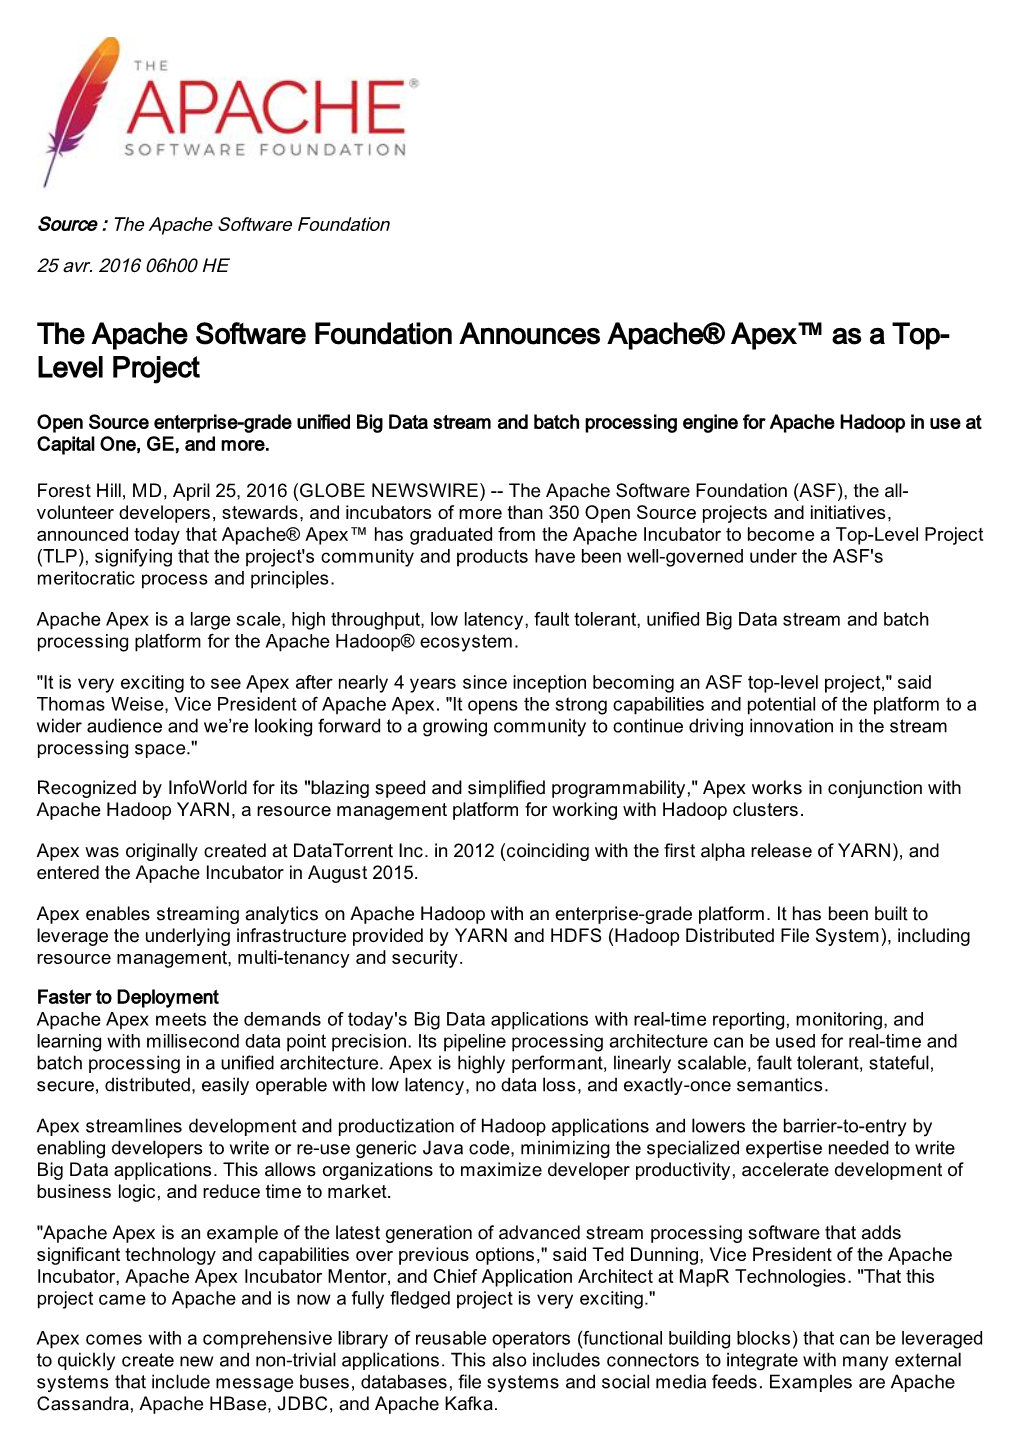 The Apache Software Foundation Announces Apache® Apex™ As a Top- Level Project